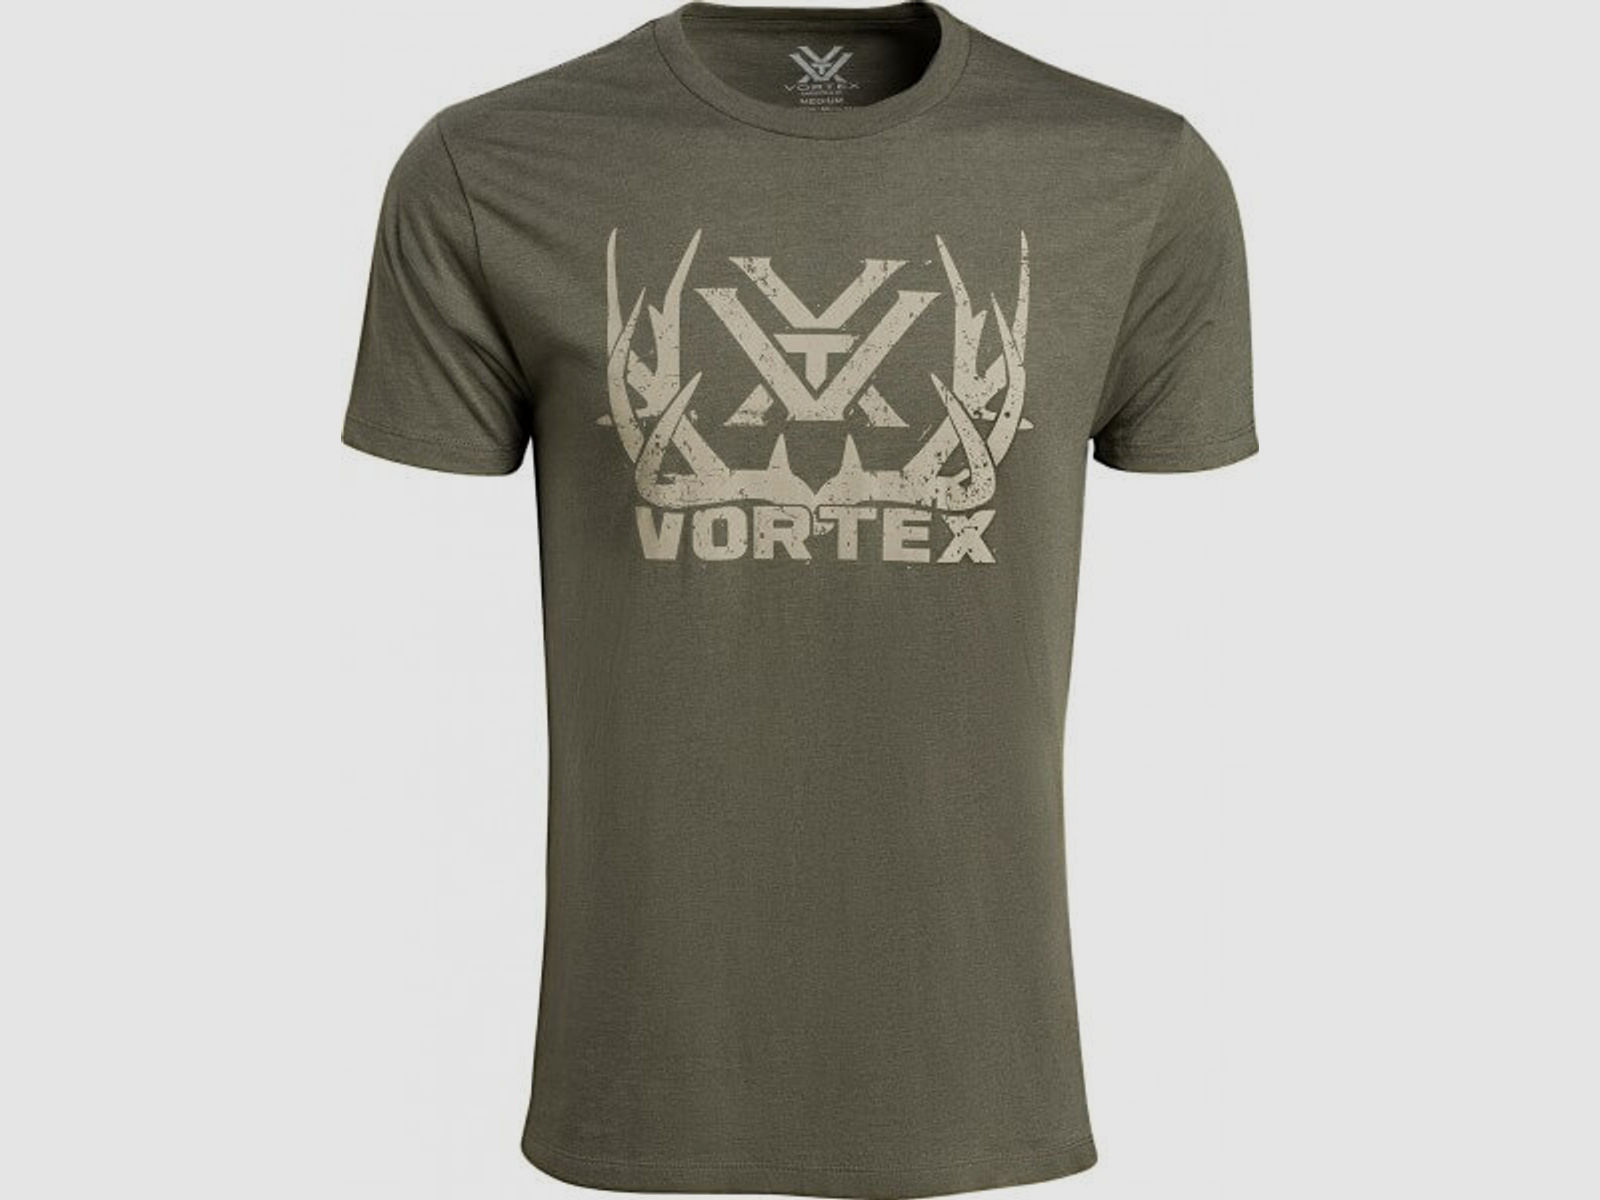 Vortex Full Tine Job Shirt Military XL